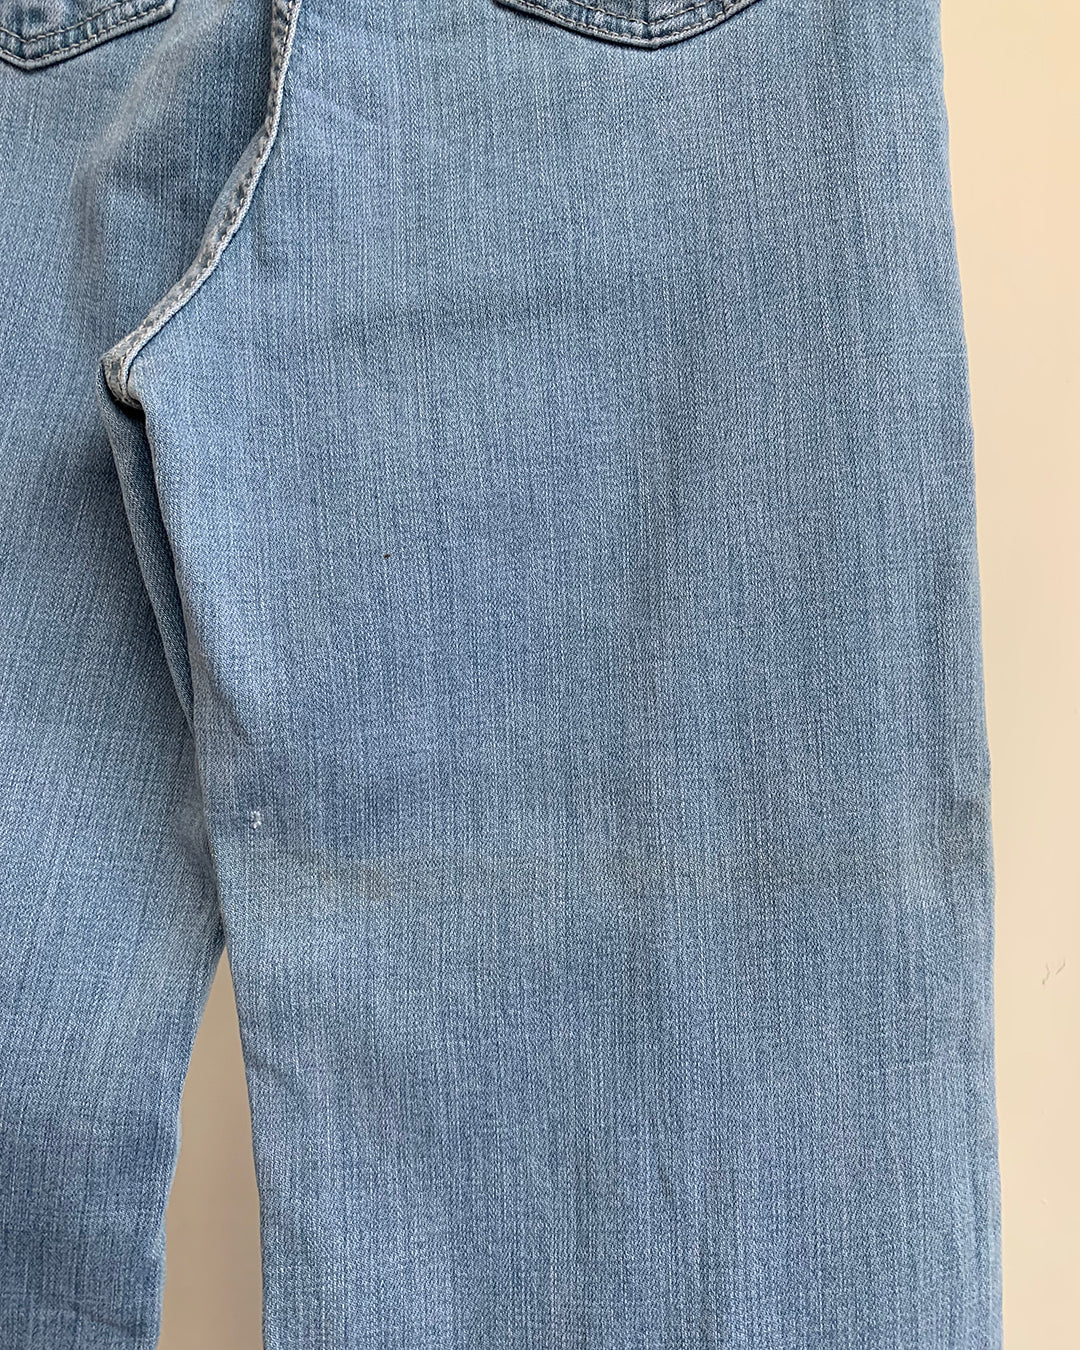 Tassel Ripped Jeans (Damage)